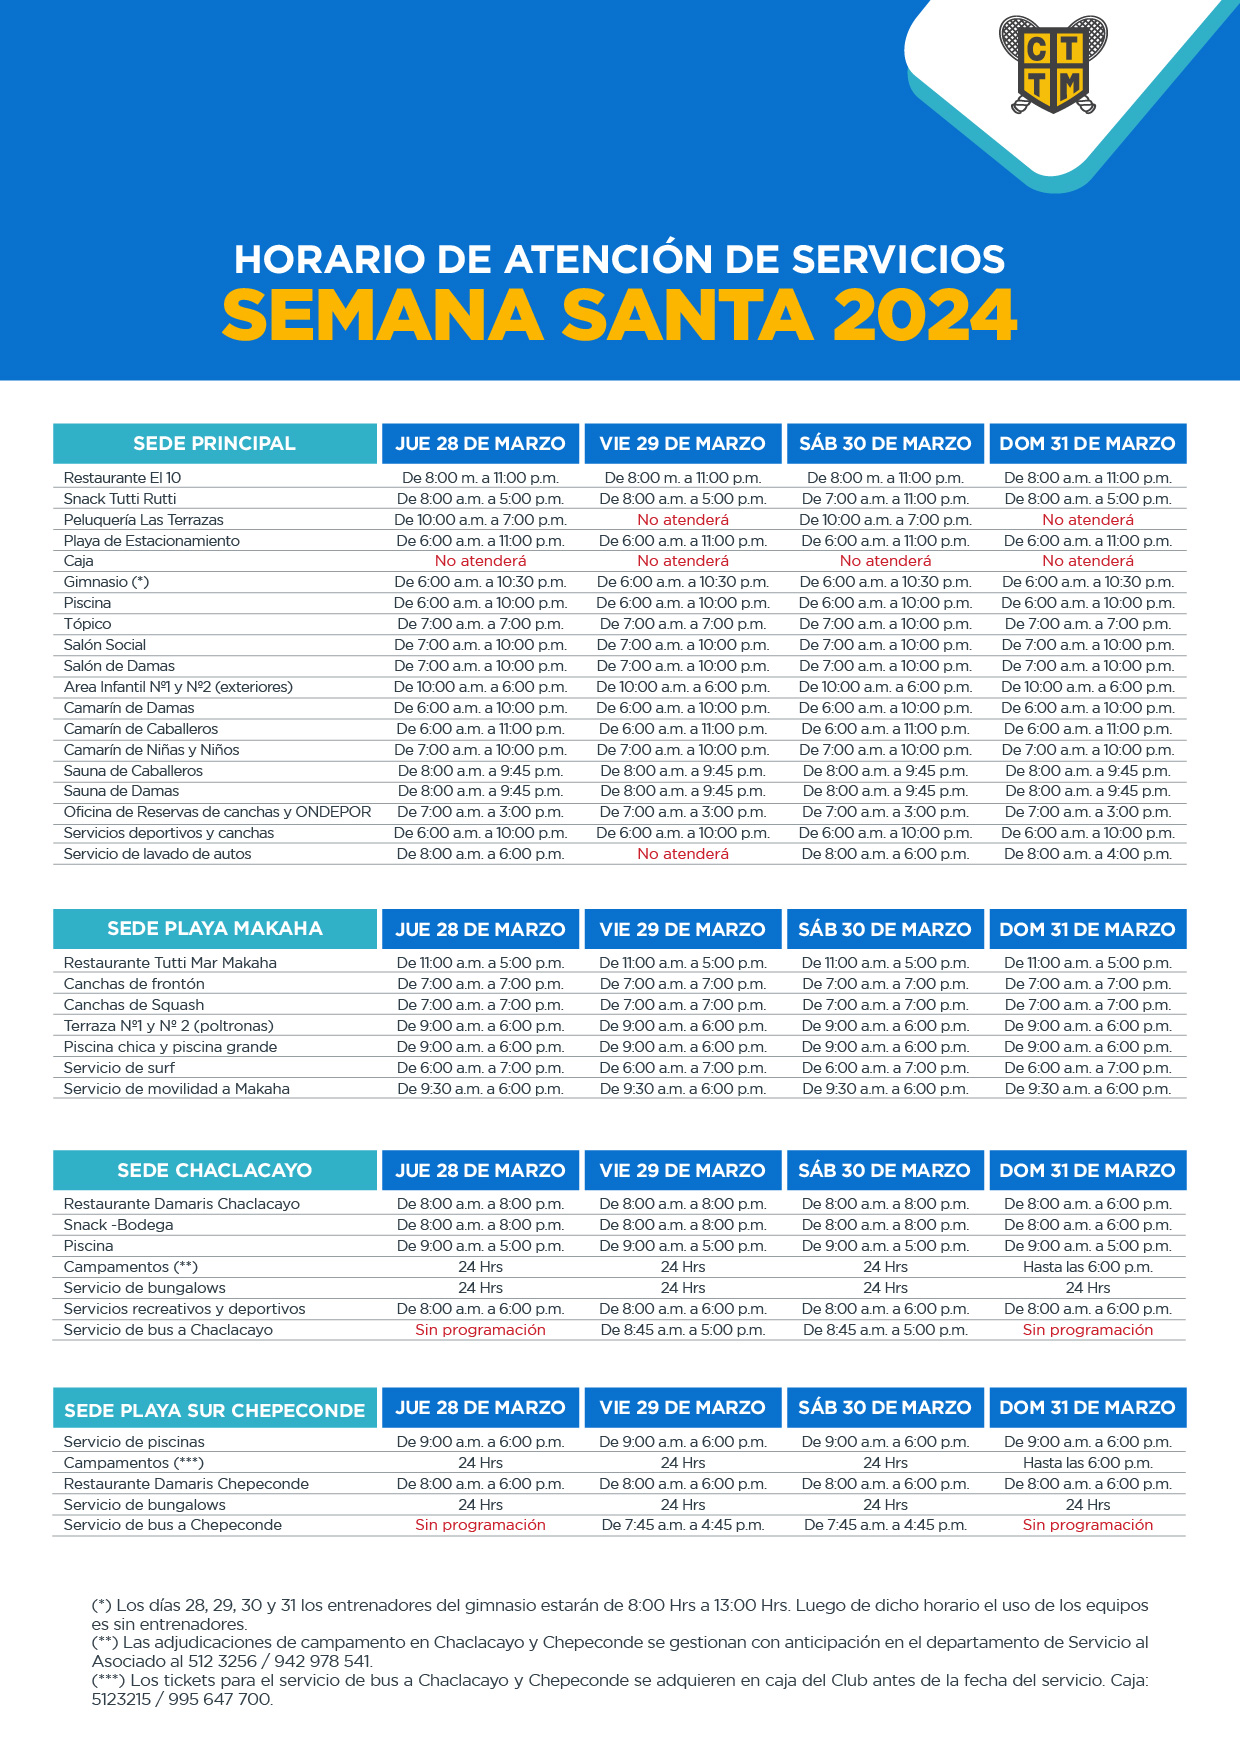 HORARIO DE ATENCIÓN DE SERVICIOS SEMANA SANTA 2024